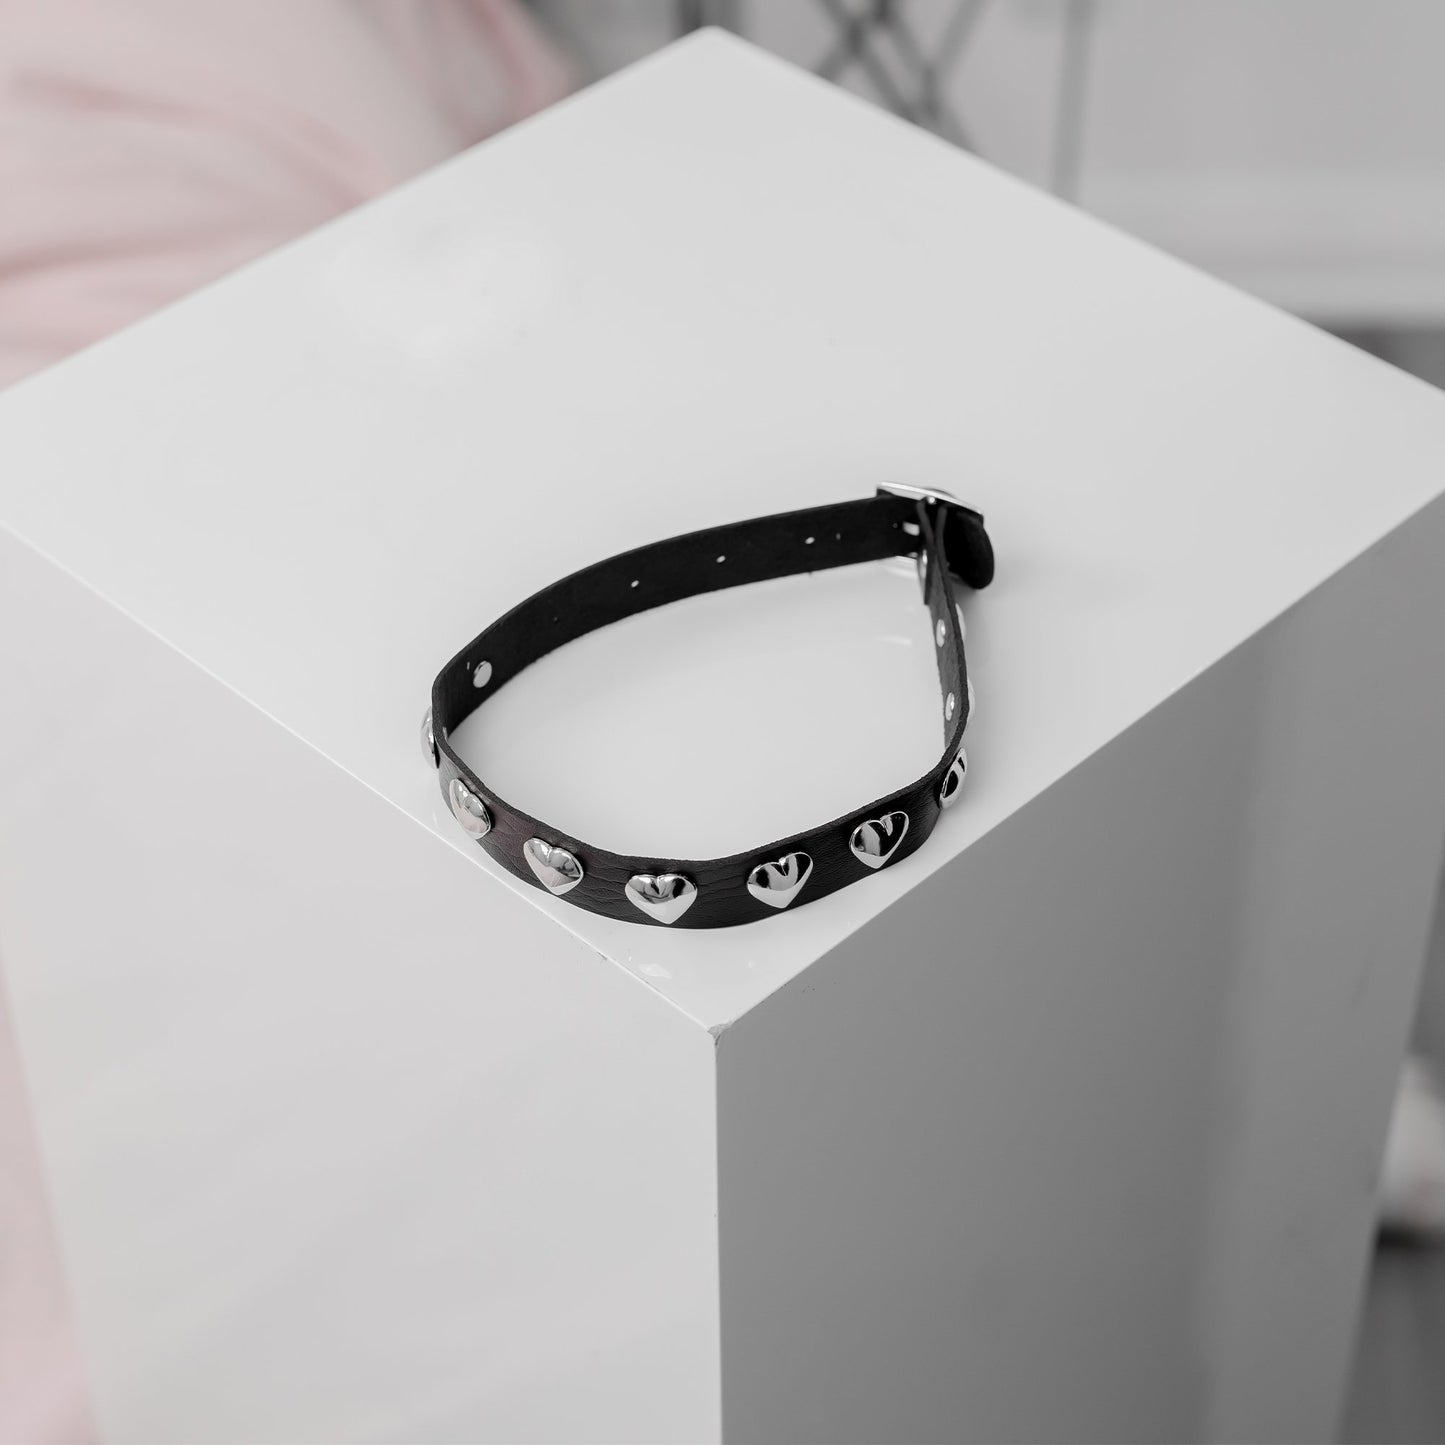 Black Heart-Shaped Choker Necklace by Lewd Fashion